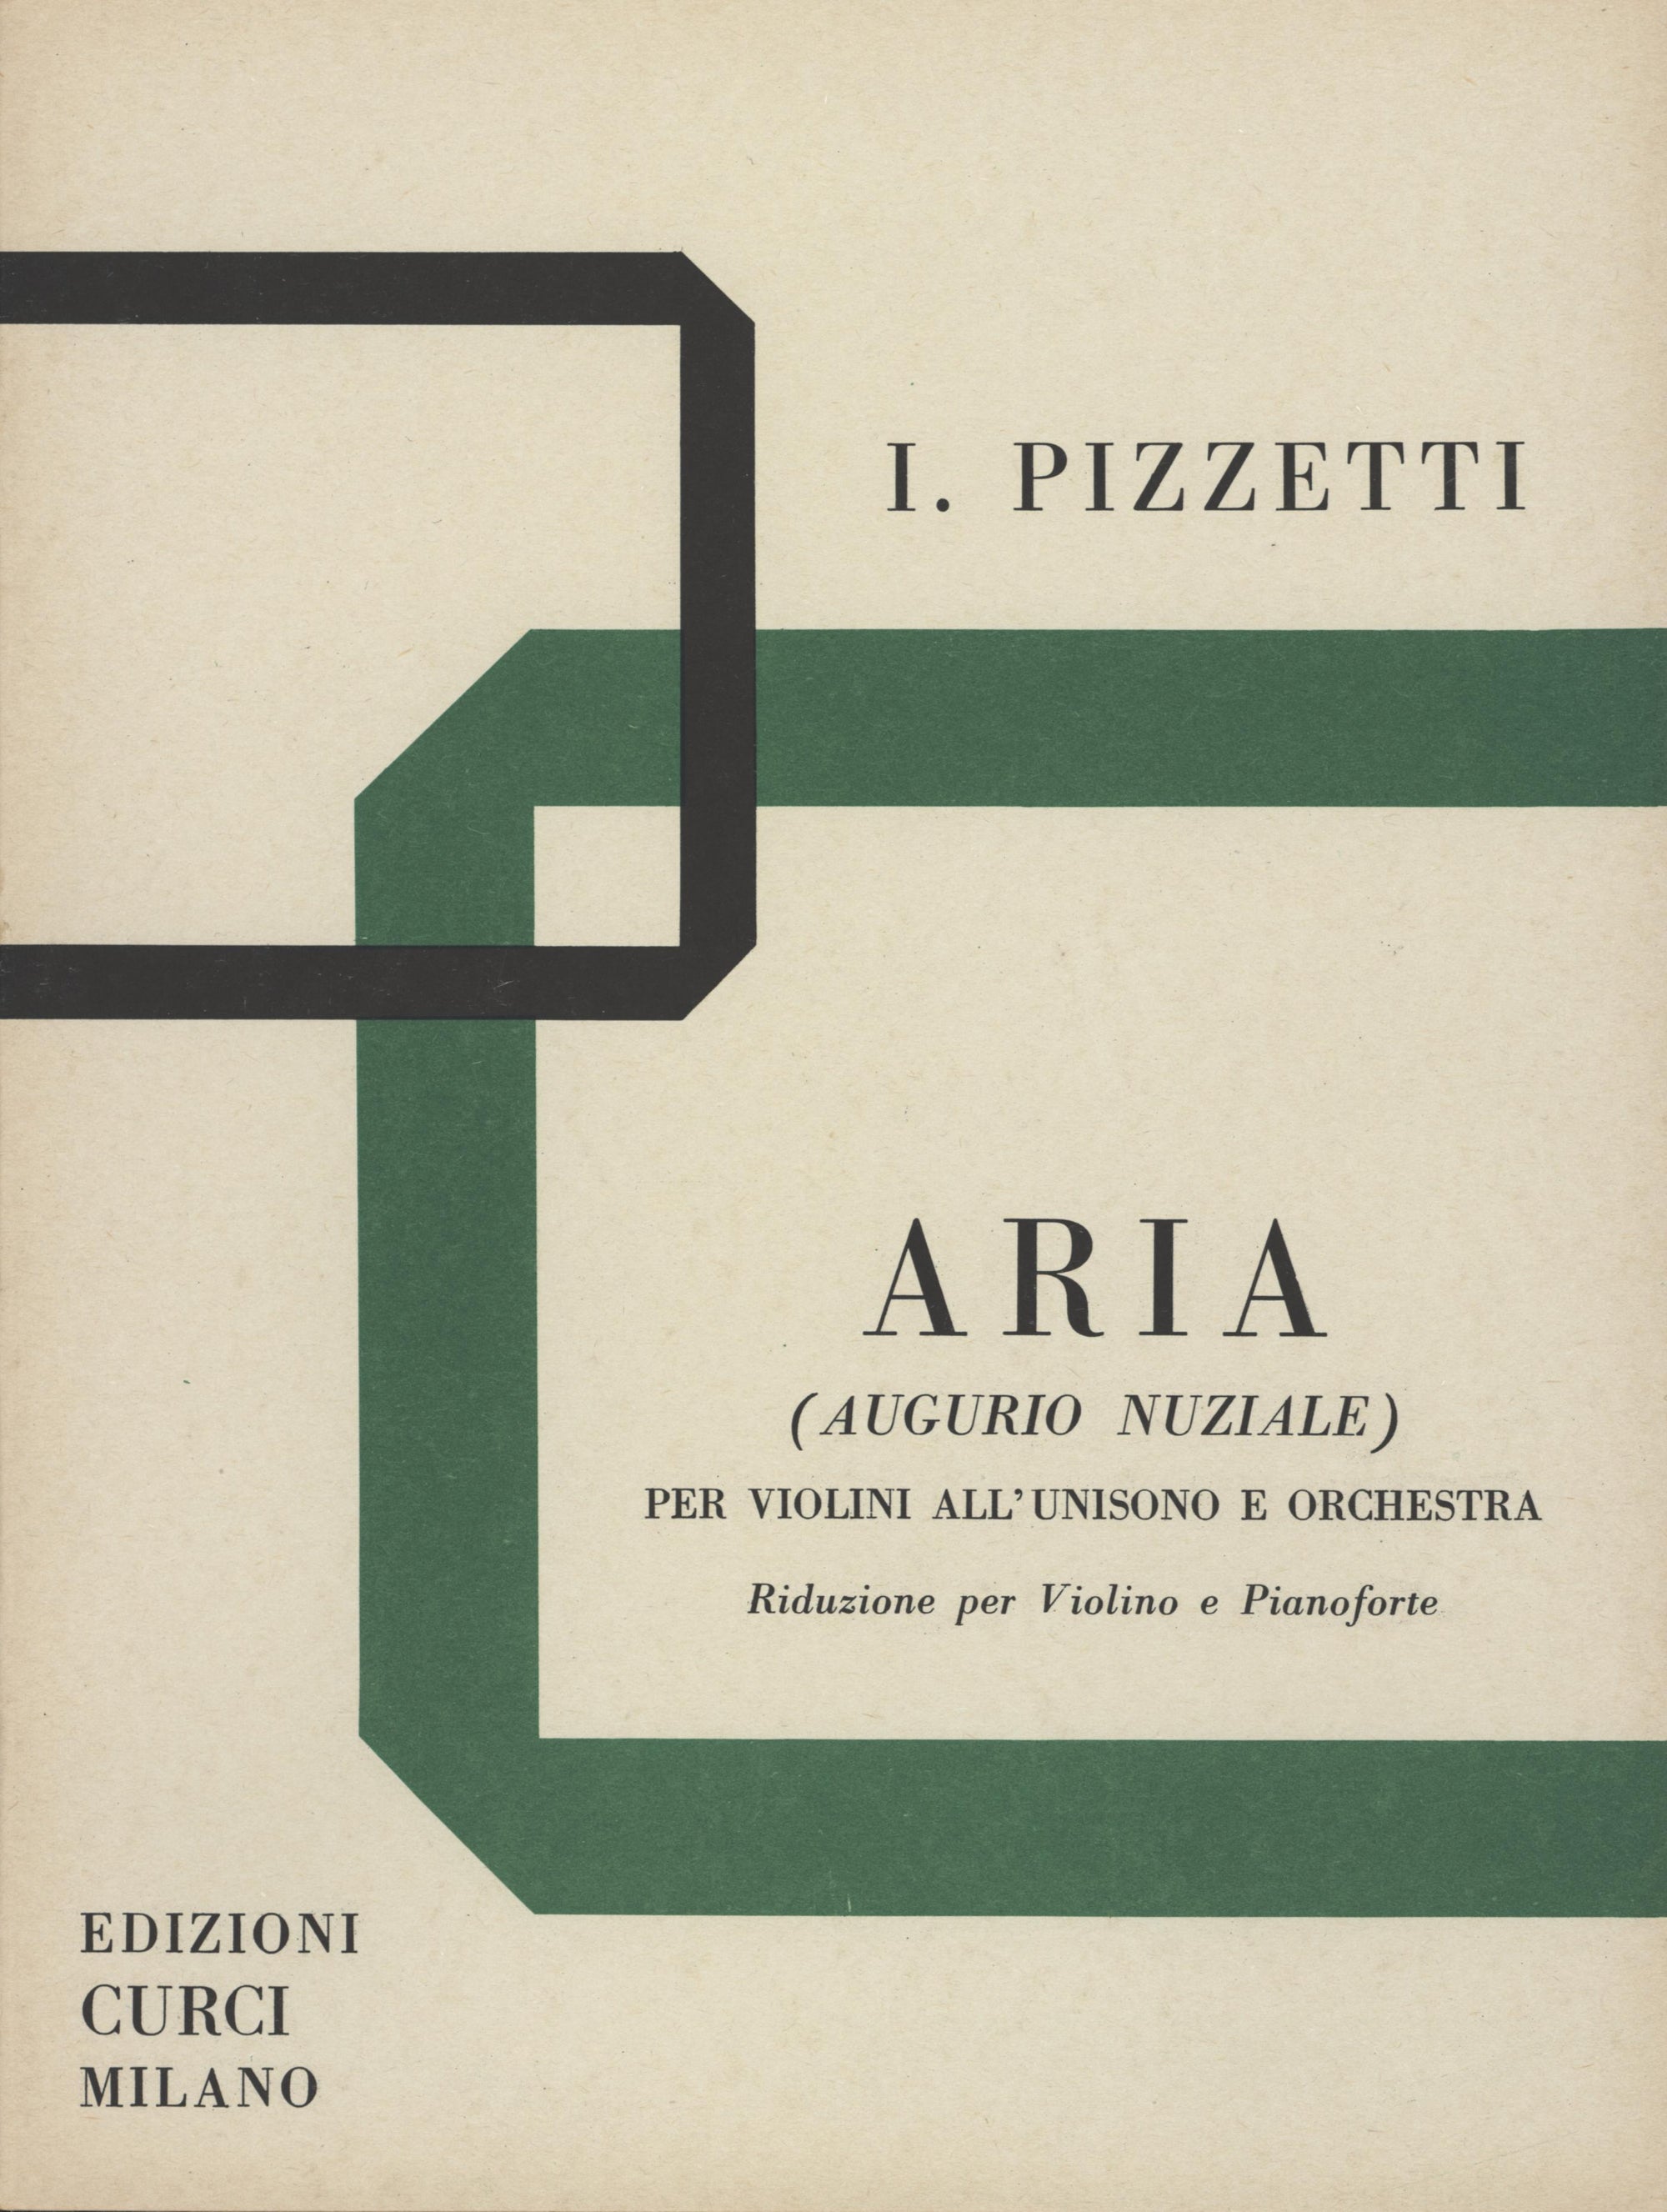 Pizzetti: Aria (Augurio nuziale)